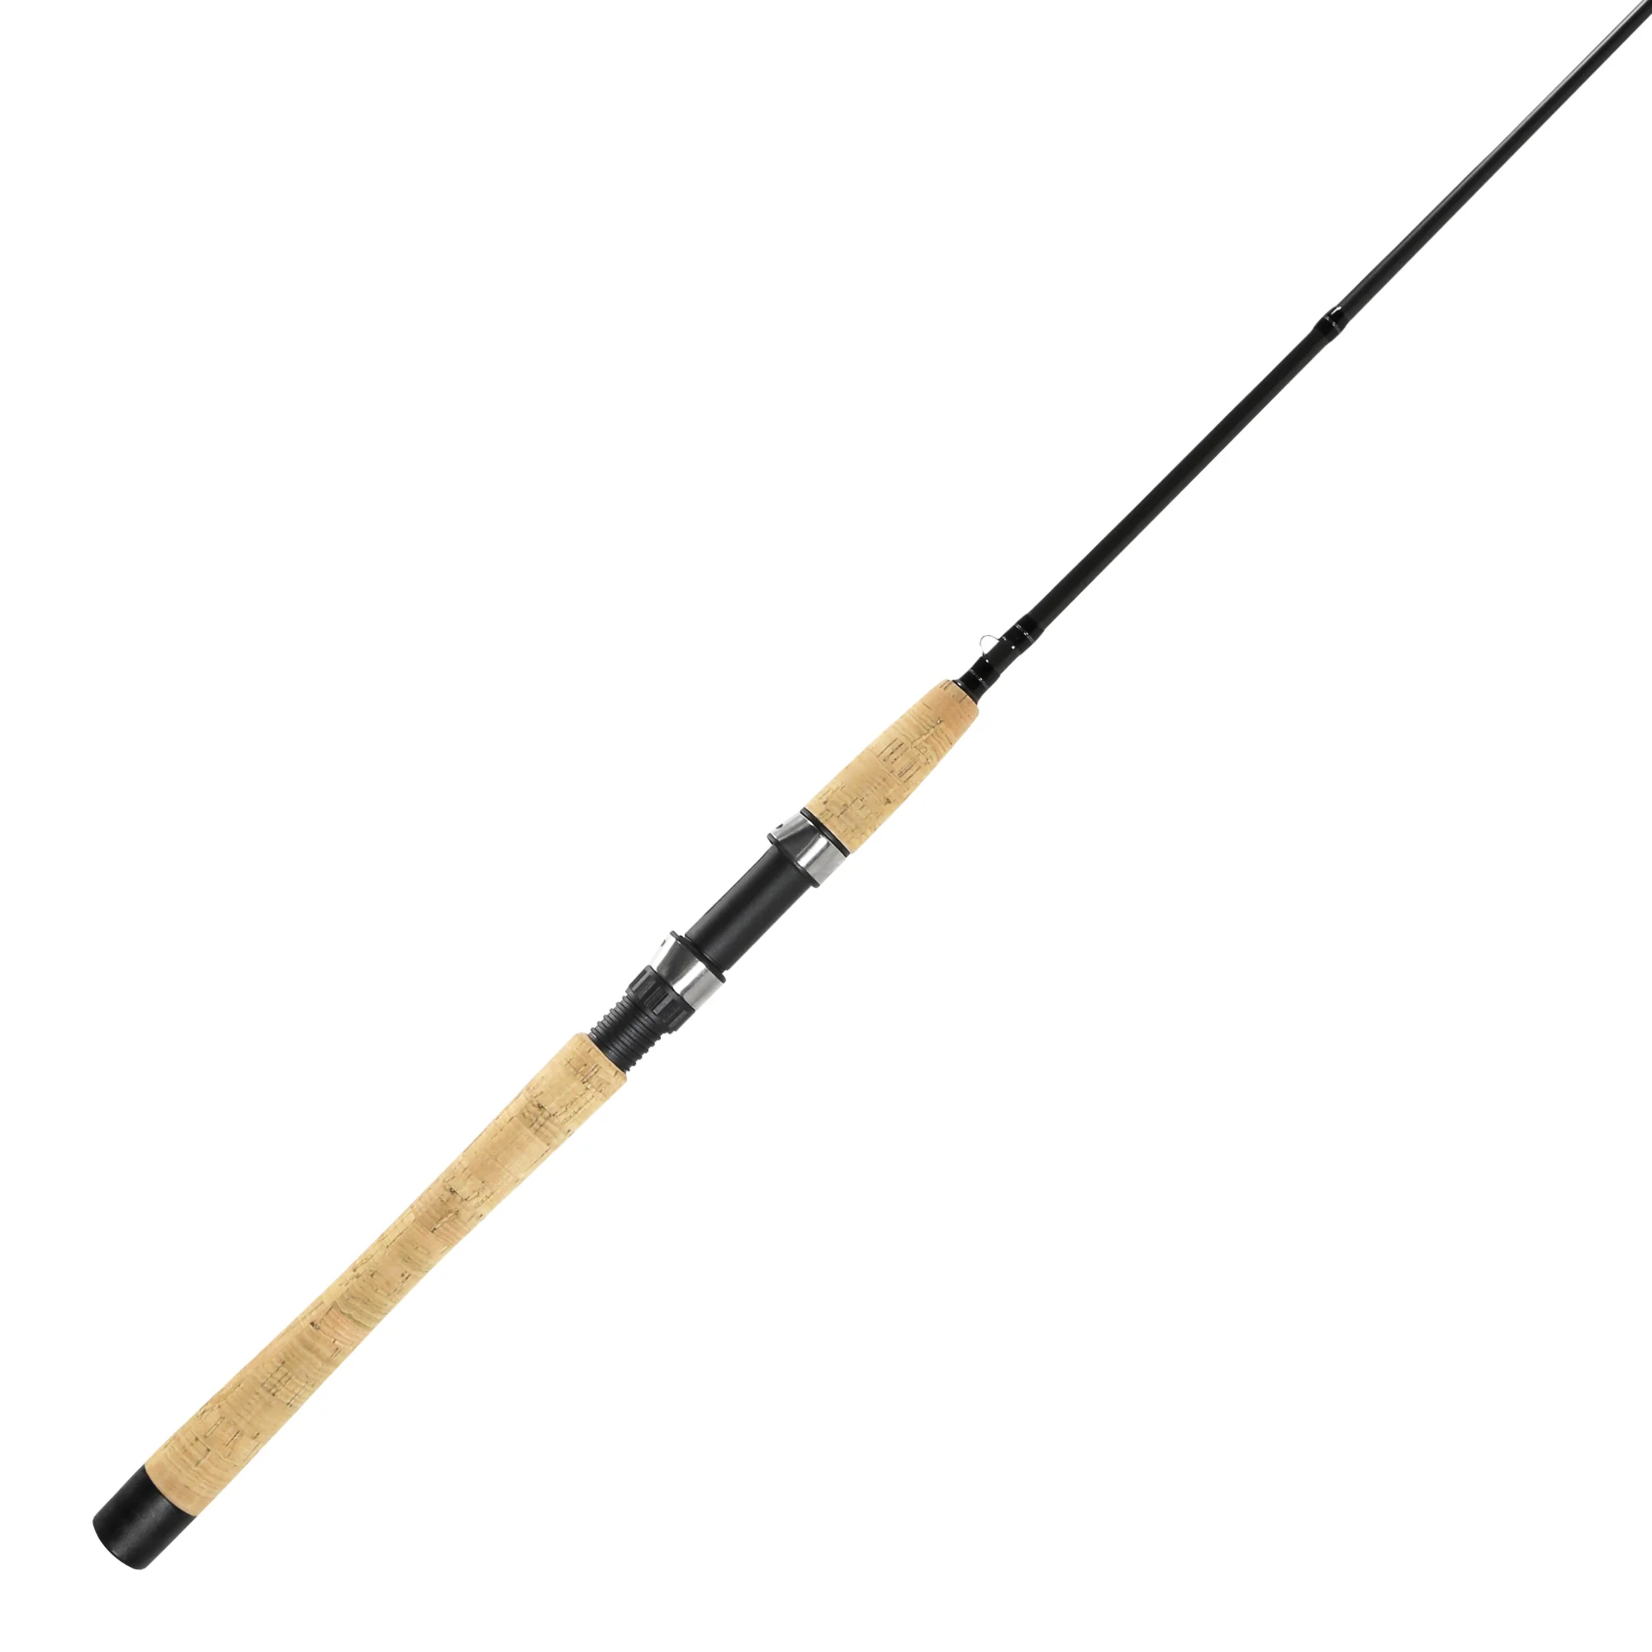 Okuma Fishing Tackle Okuma Celilo Spinning Rod